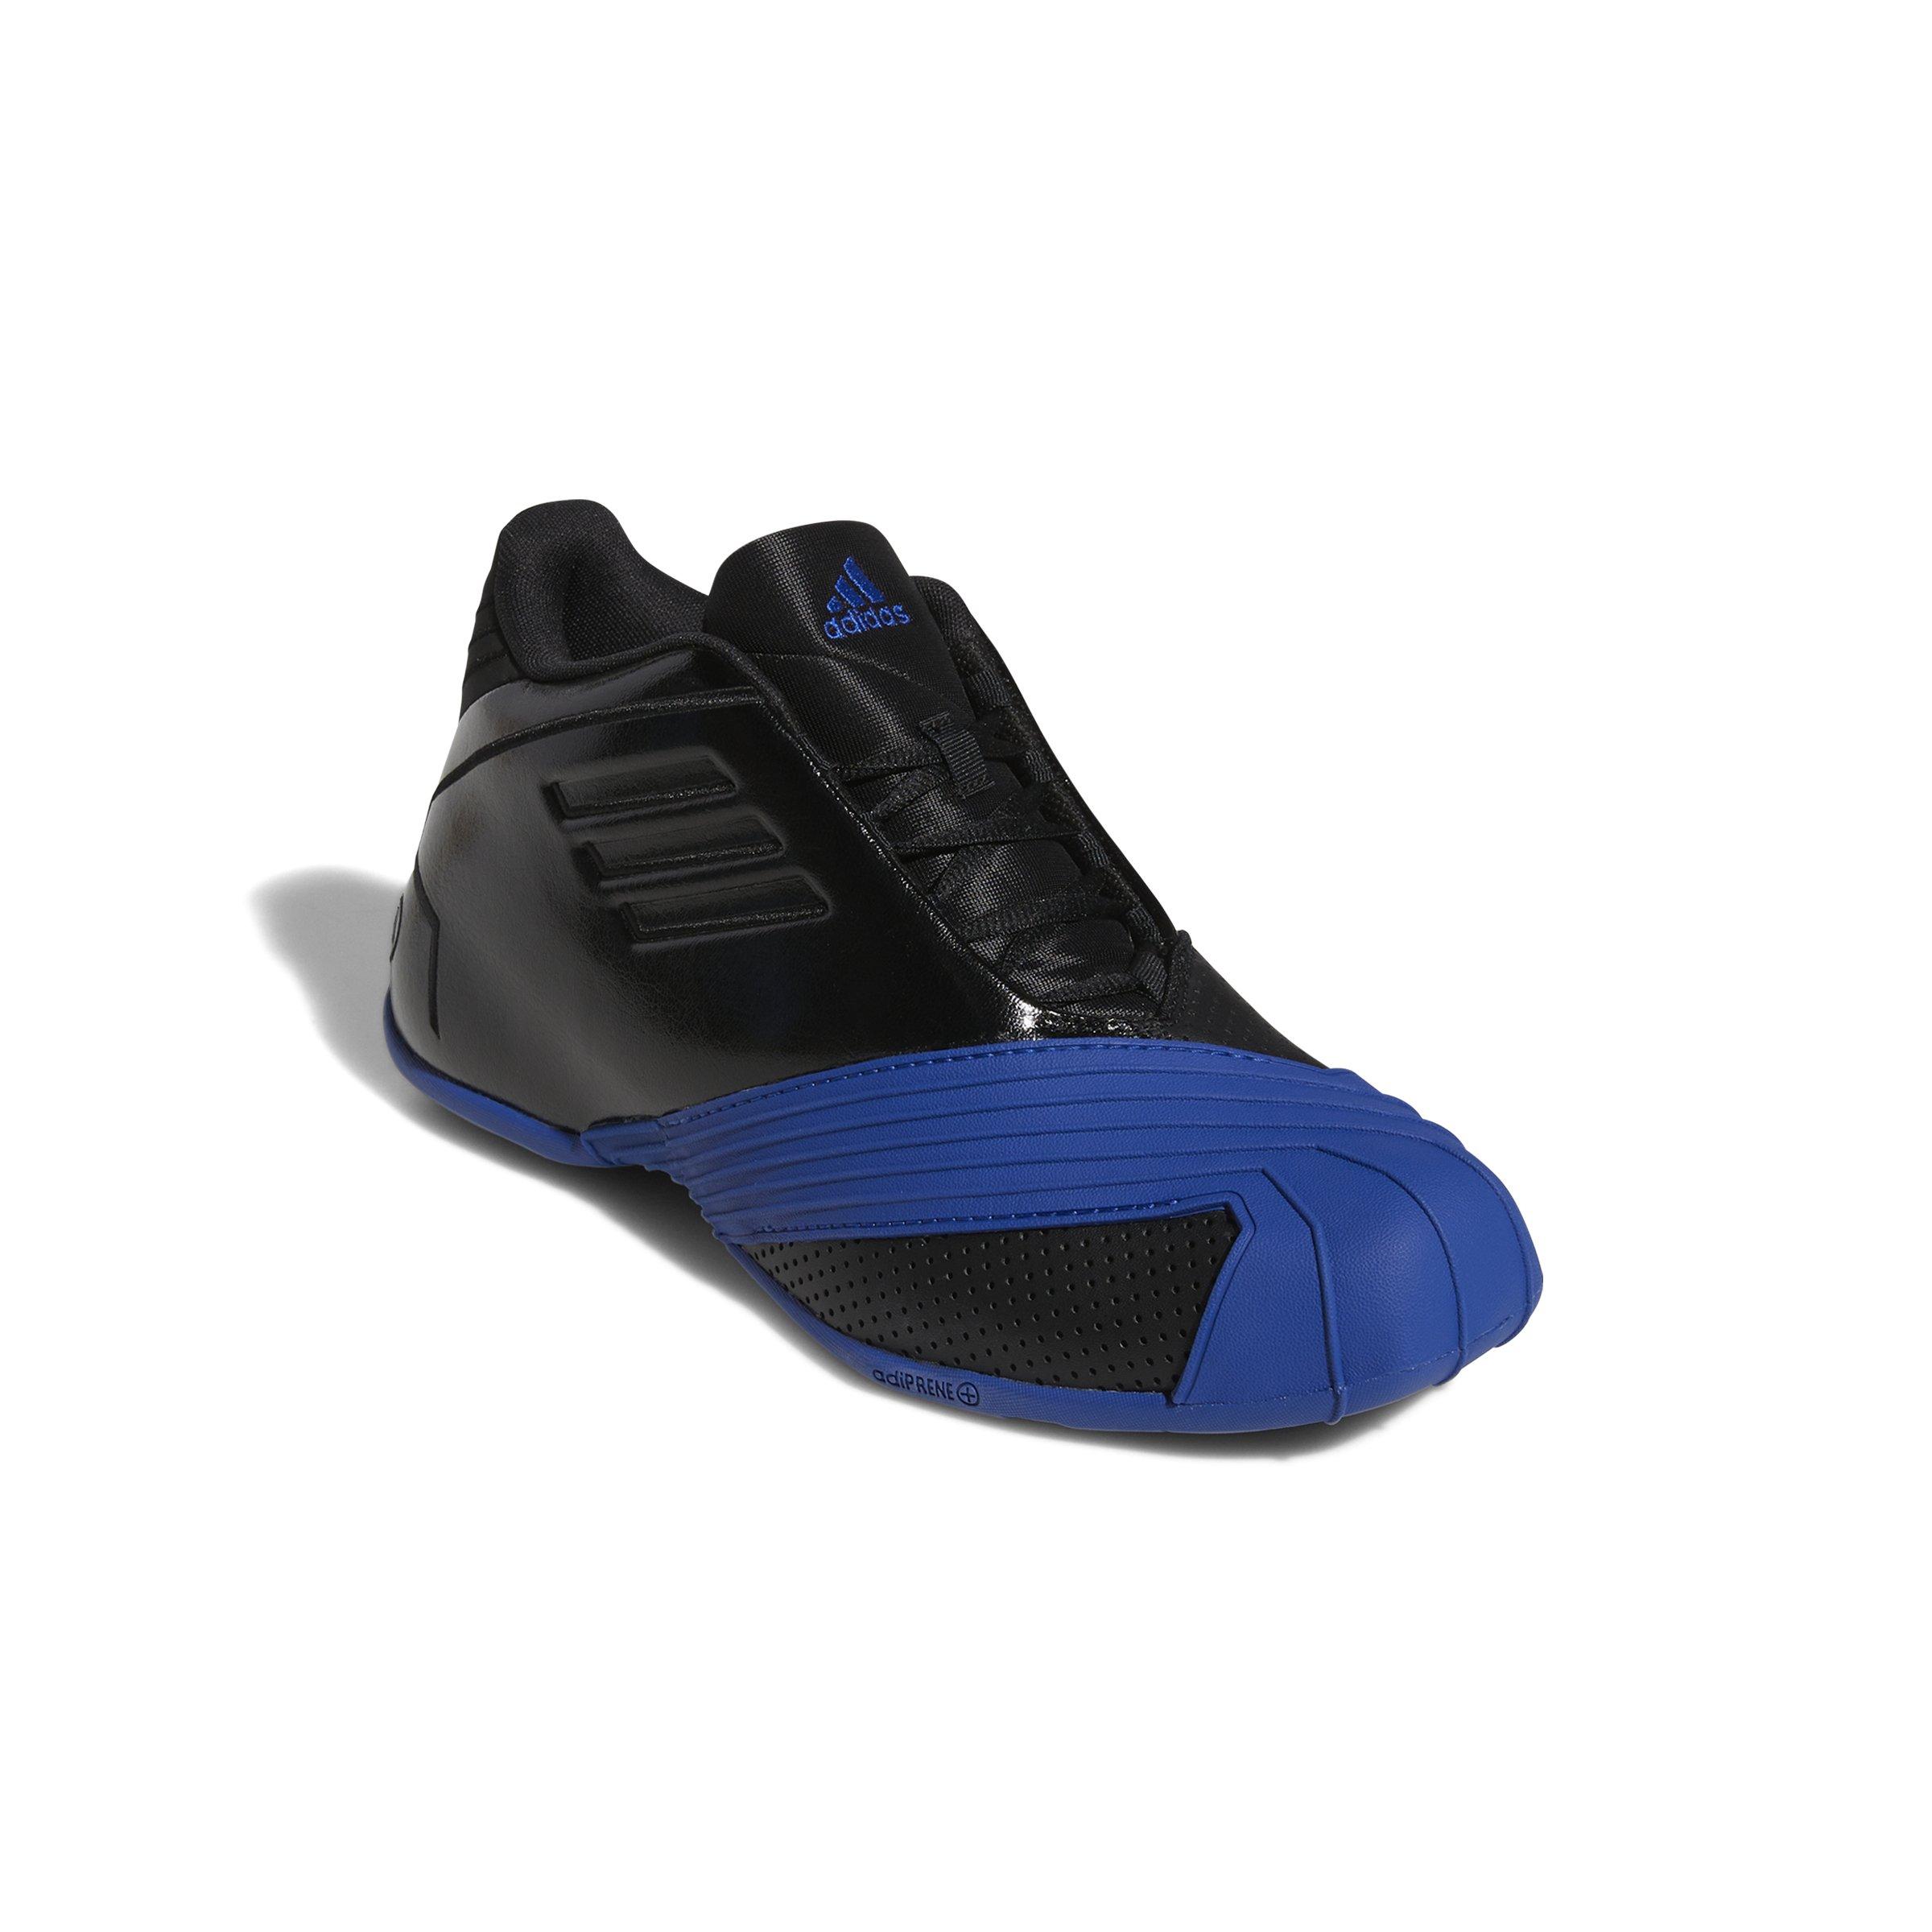 Adidas Men's T-Mac 1 Basketball Shoes in Black/Core Black Size 14.0